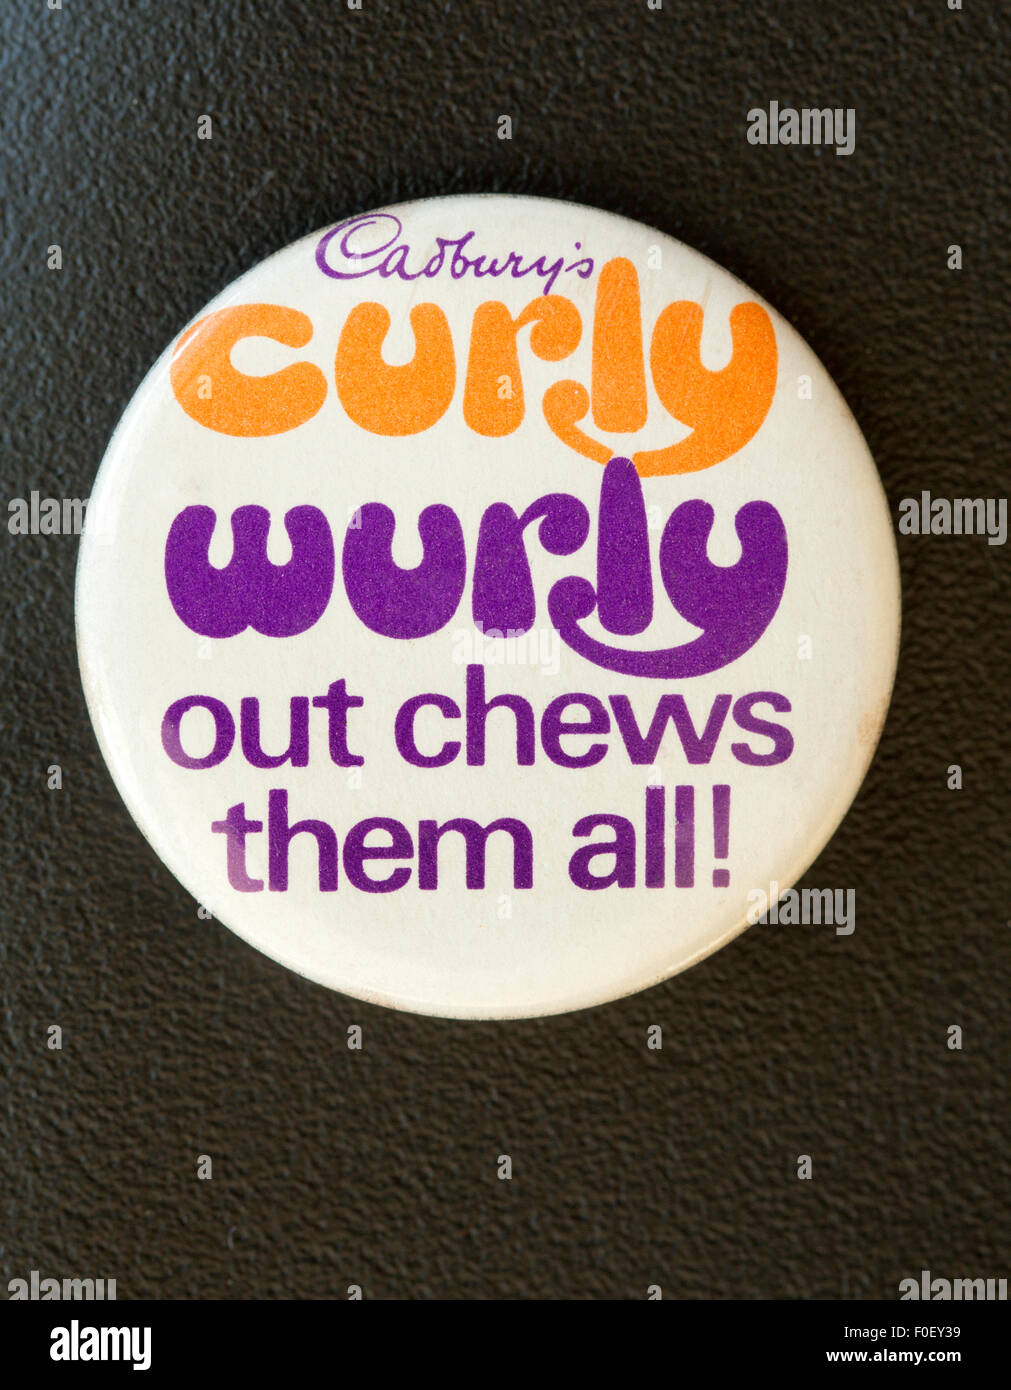 Vintage Pin Button Badge advertising Cadburys Curly Wurly Chocolate Bars Stock Photo